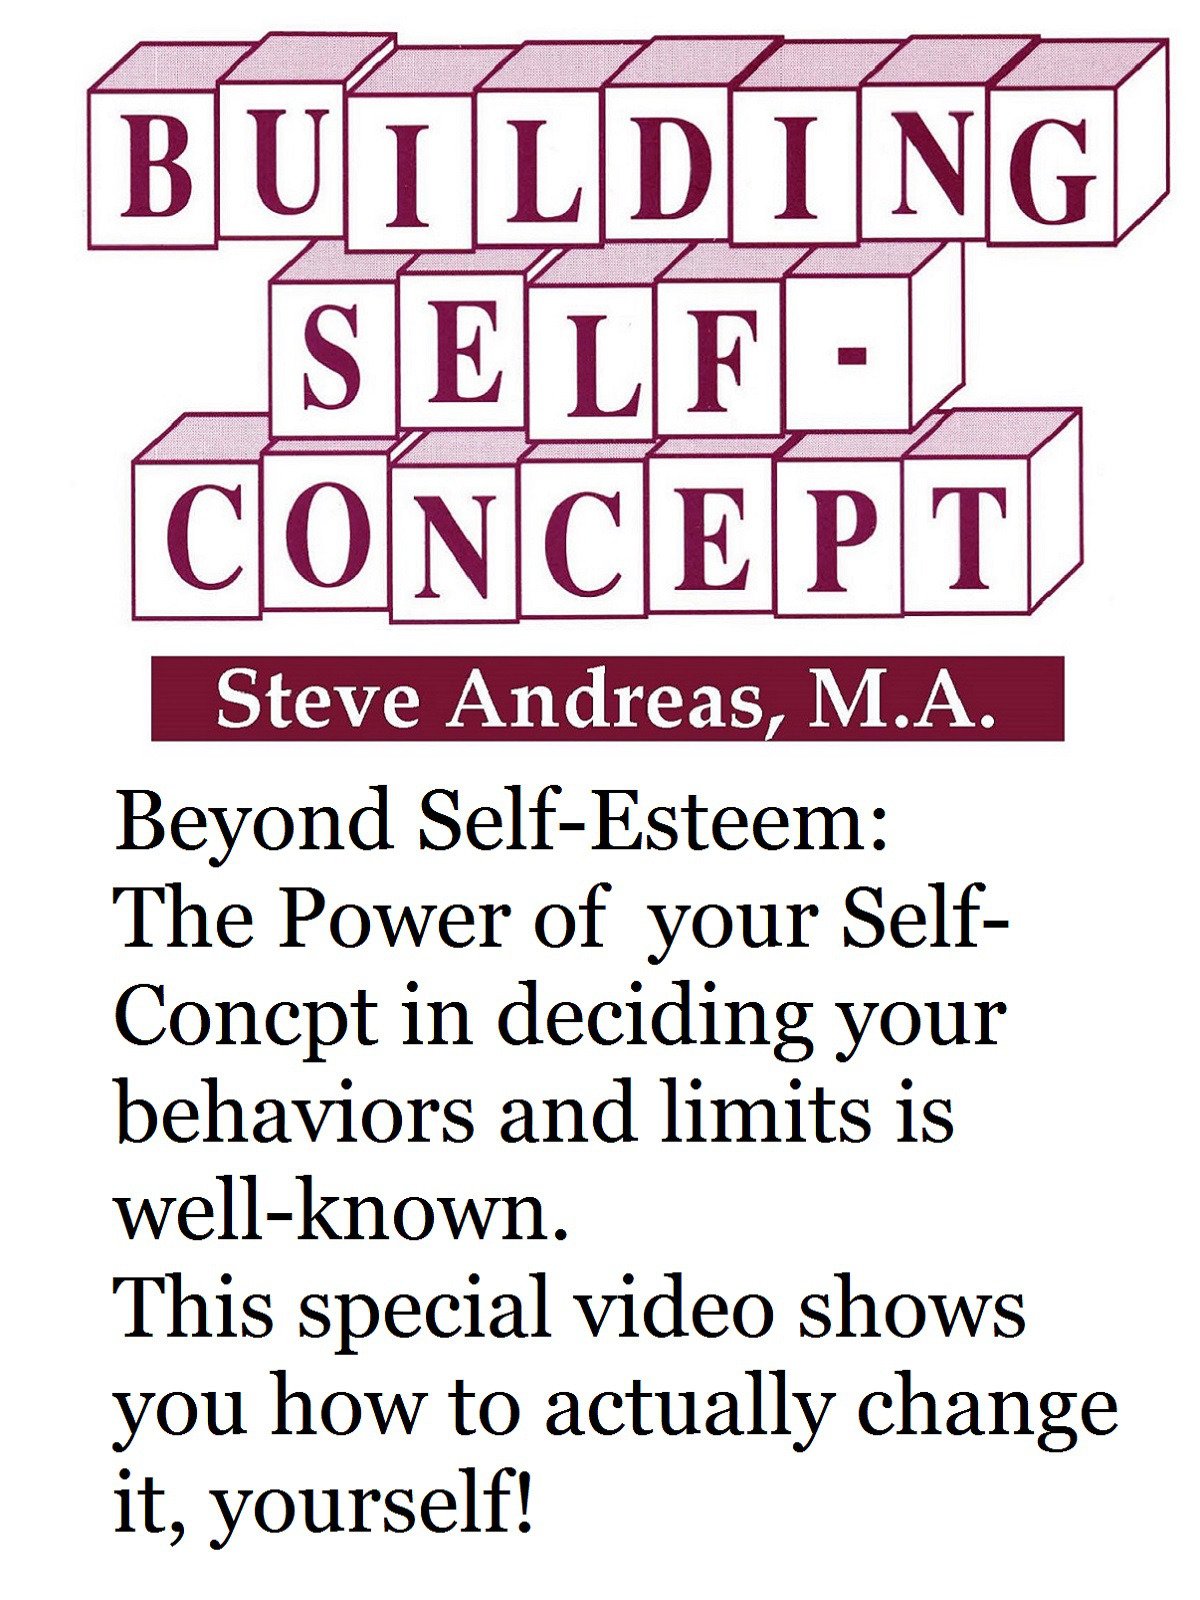 Steve Andreas - Building Self Concept